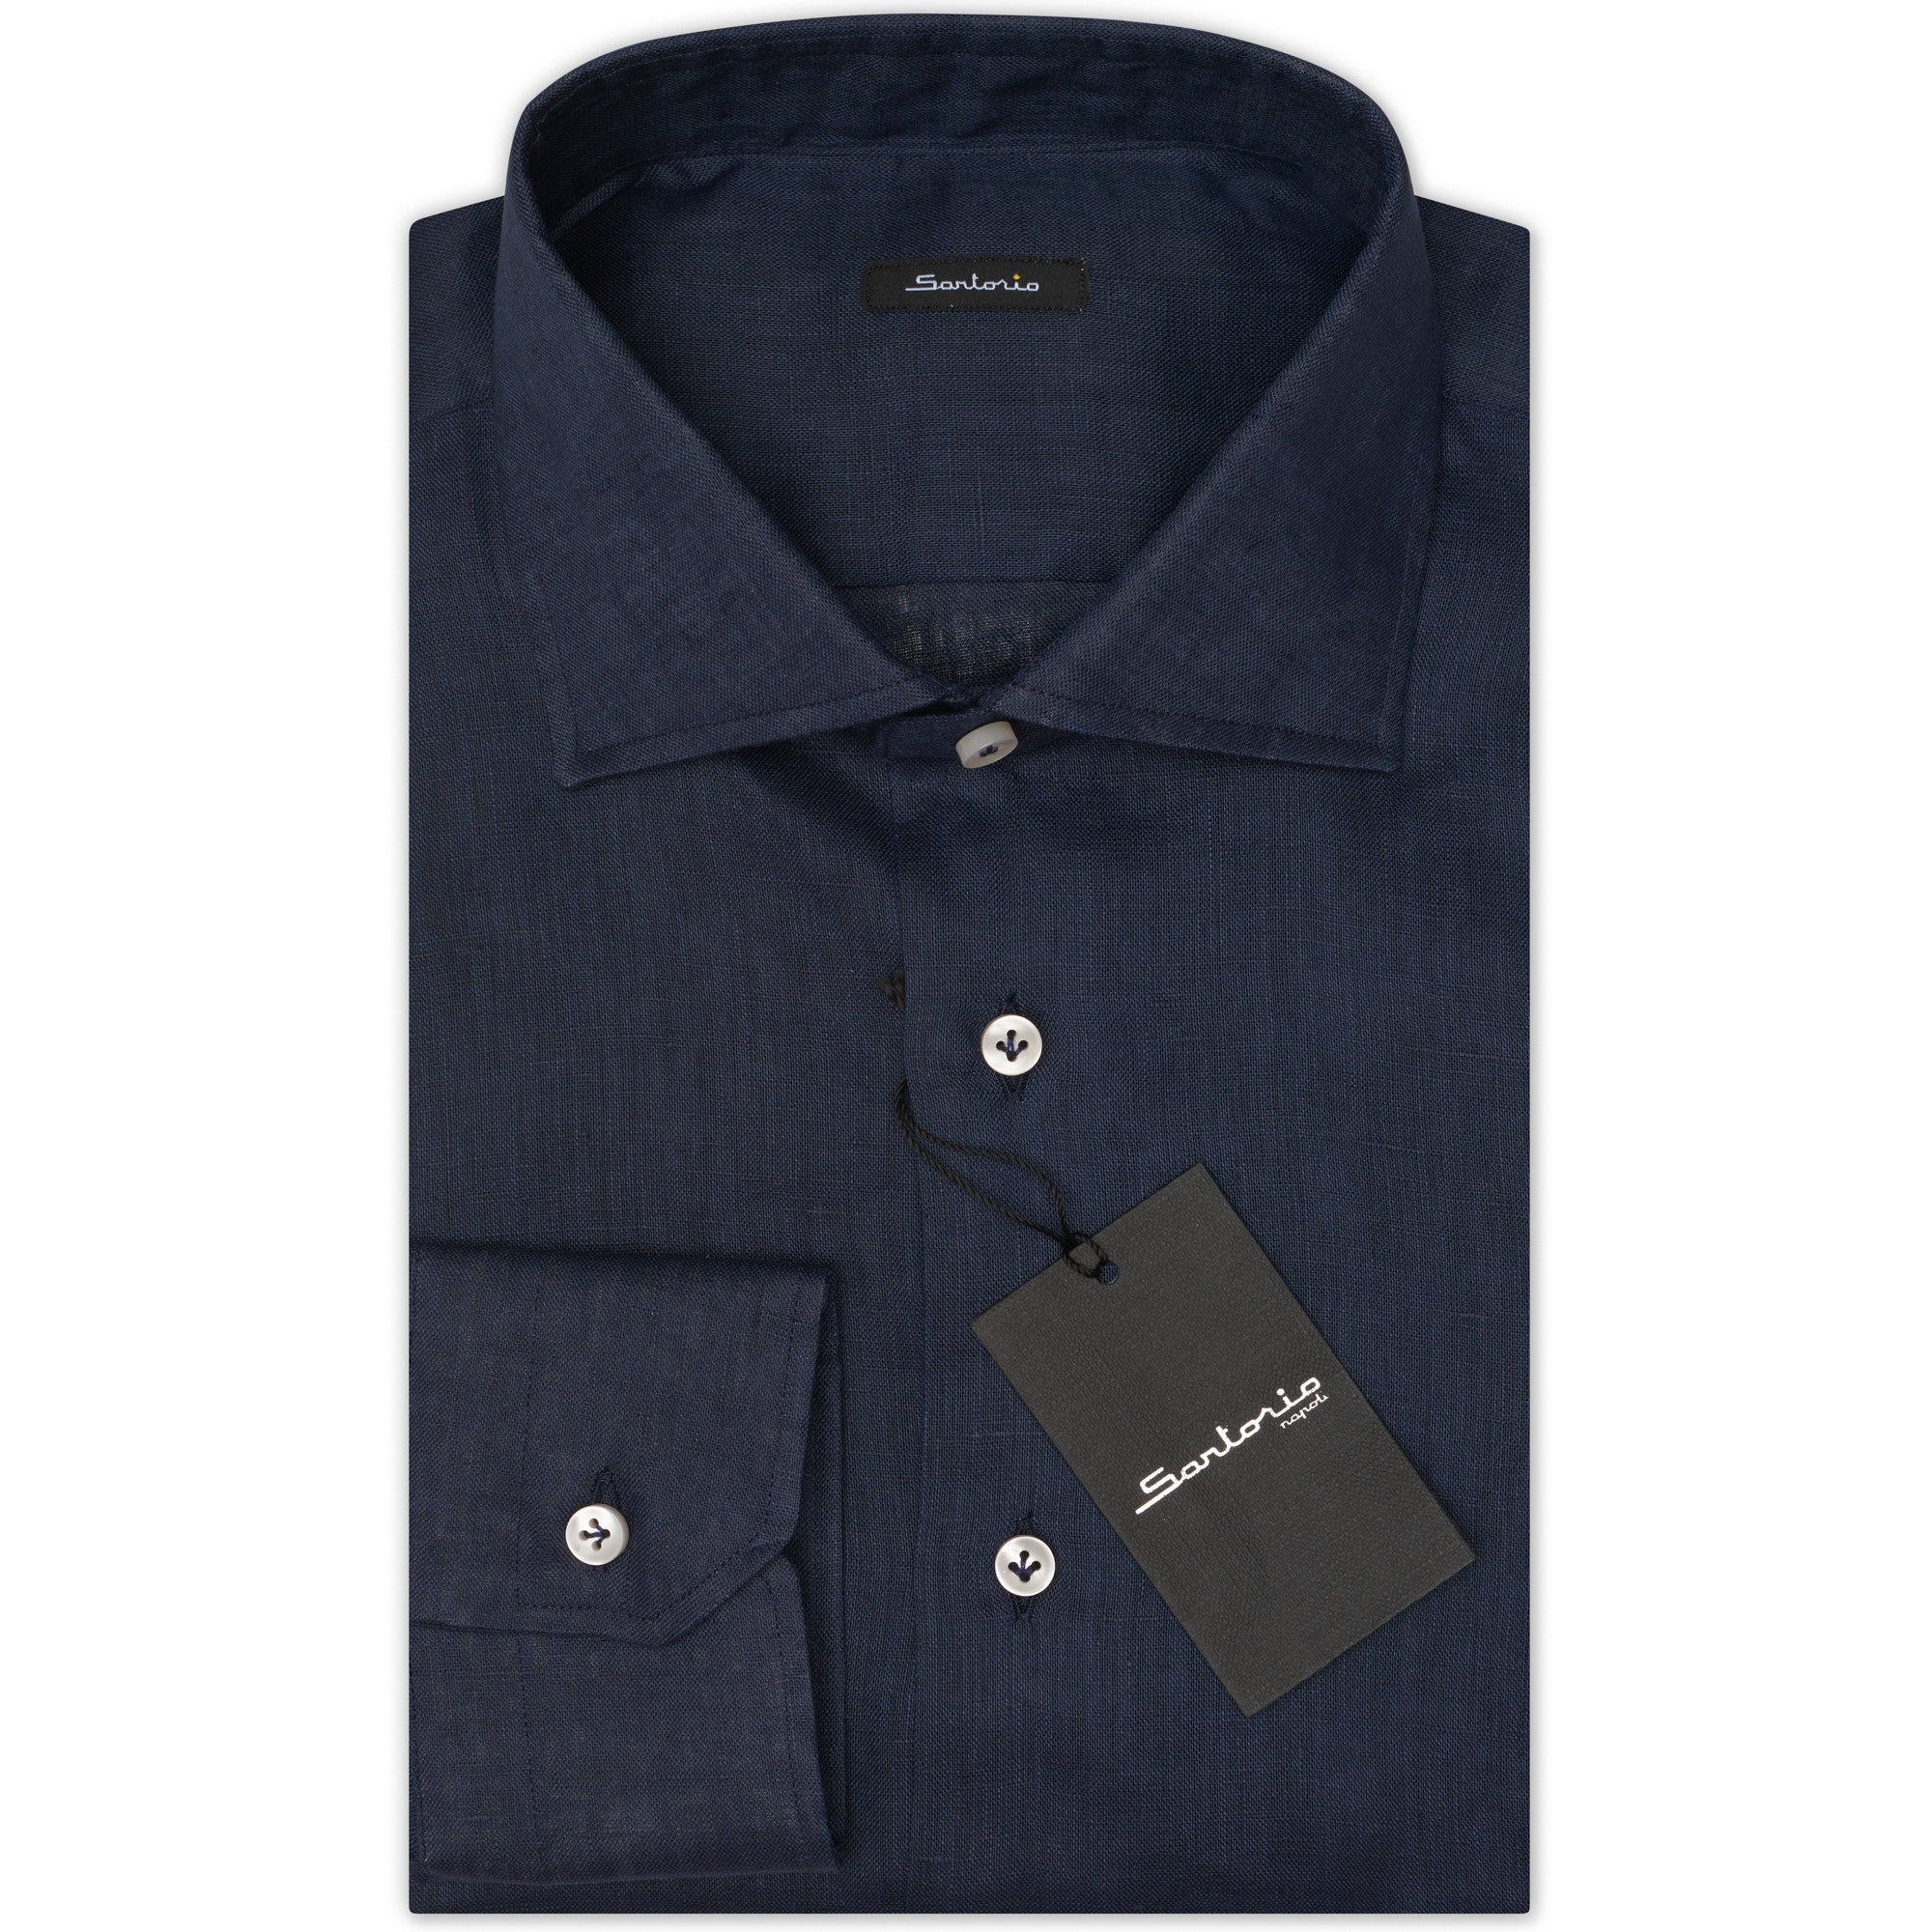 SARTORIO Napoli by KITON Midnight Blue Linen Spread Collar Shirt Slim Fit NEW SARTORIO